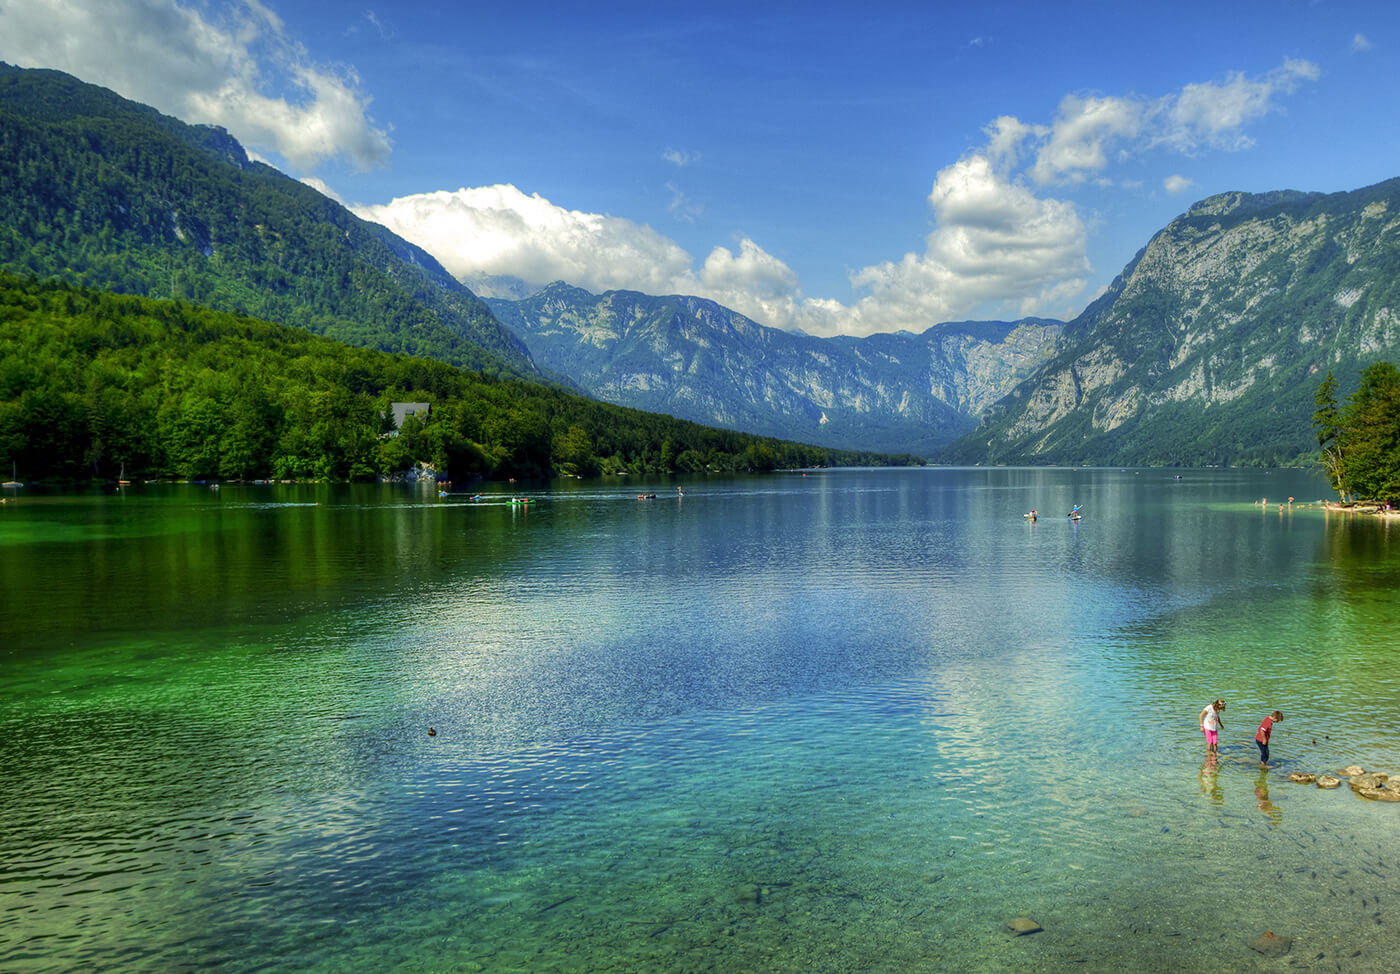 MyBestPlace - Lake Bohinj, an authentic natural beauty of Slovenia